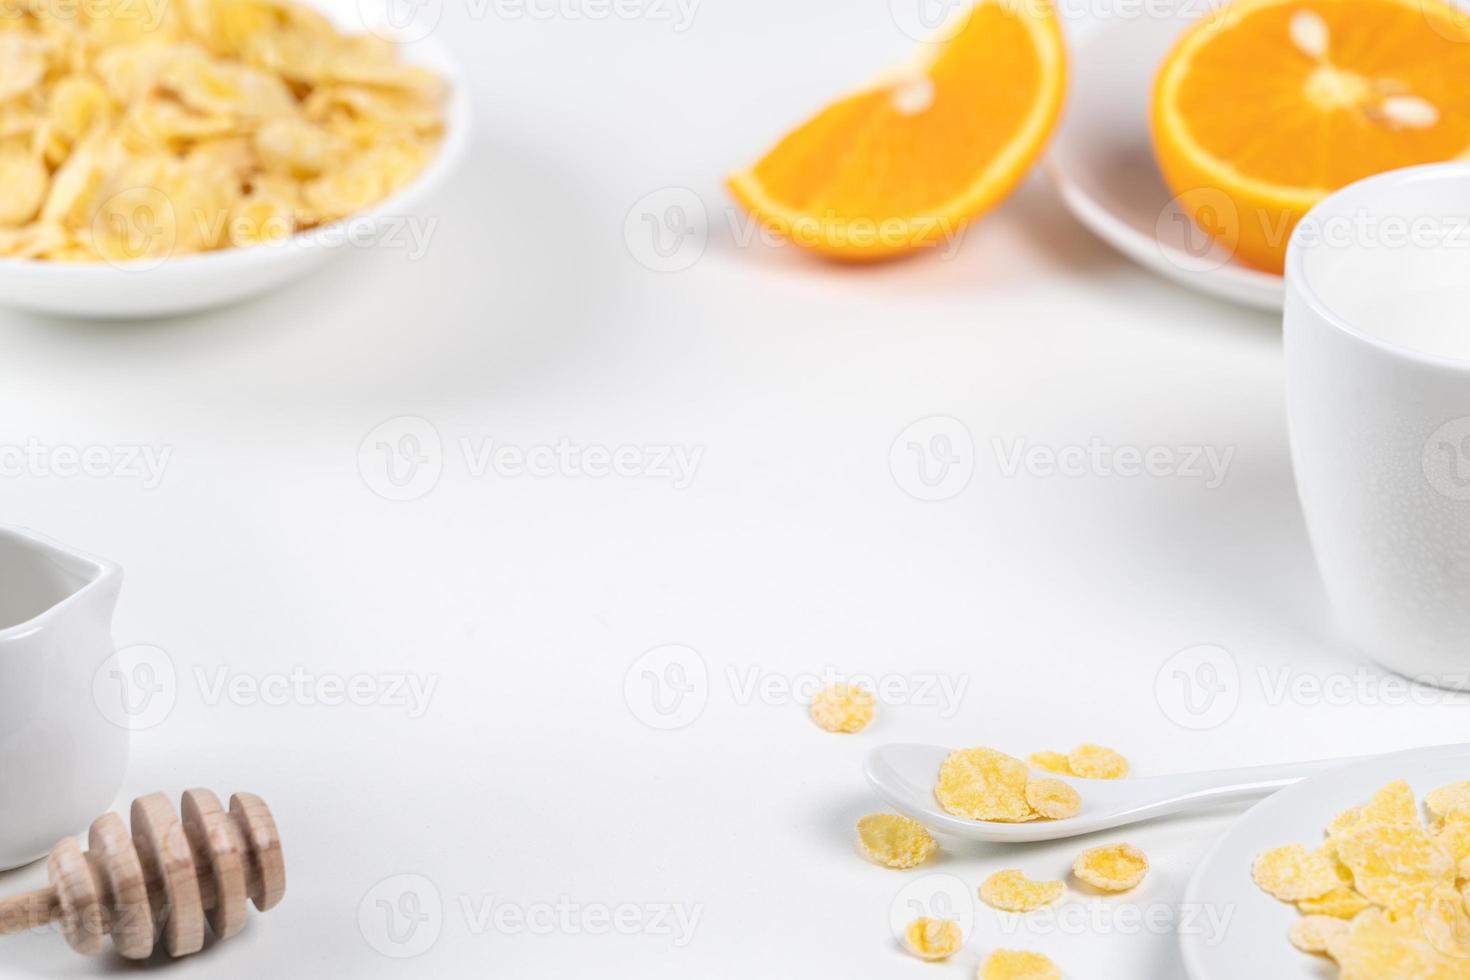 cornflakes kom snoepjes met melk en sinaasappel op witte achtergrond, close-up, vers en gezond ontbijt ontwerpconcept. foto